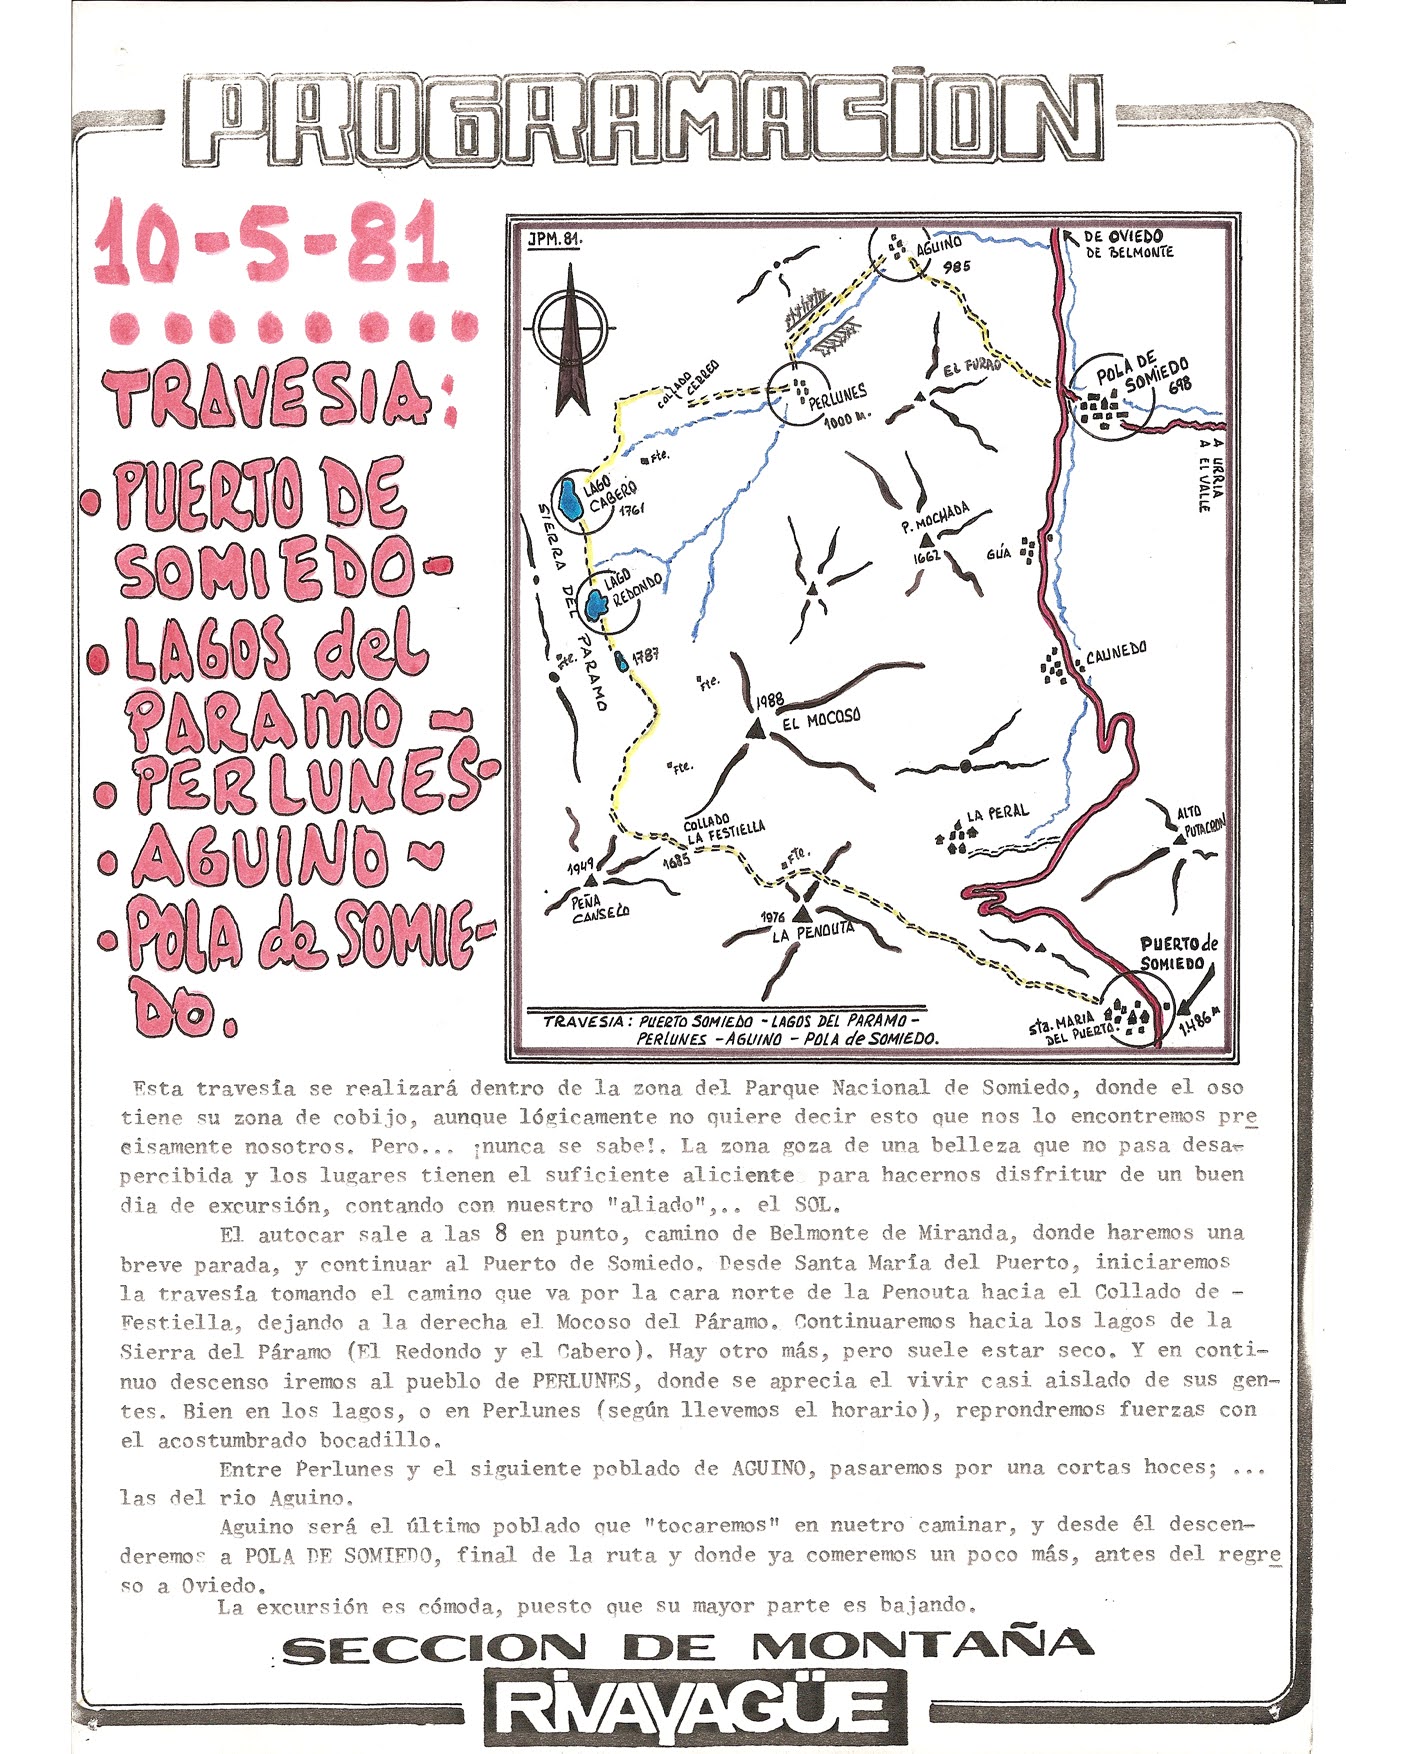 10 mayo, 1981: Travesía Puerto de Somiedo - Pola de Somiedo